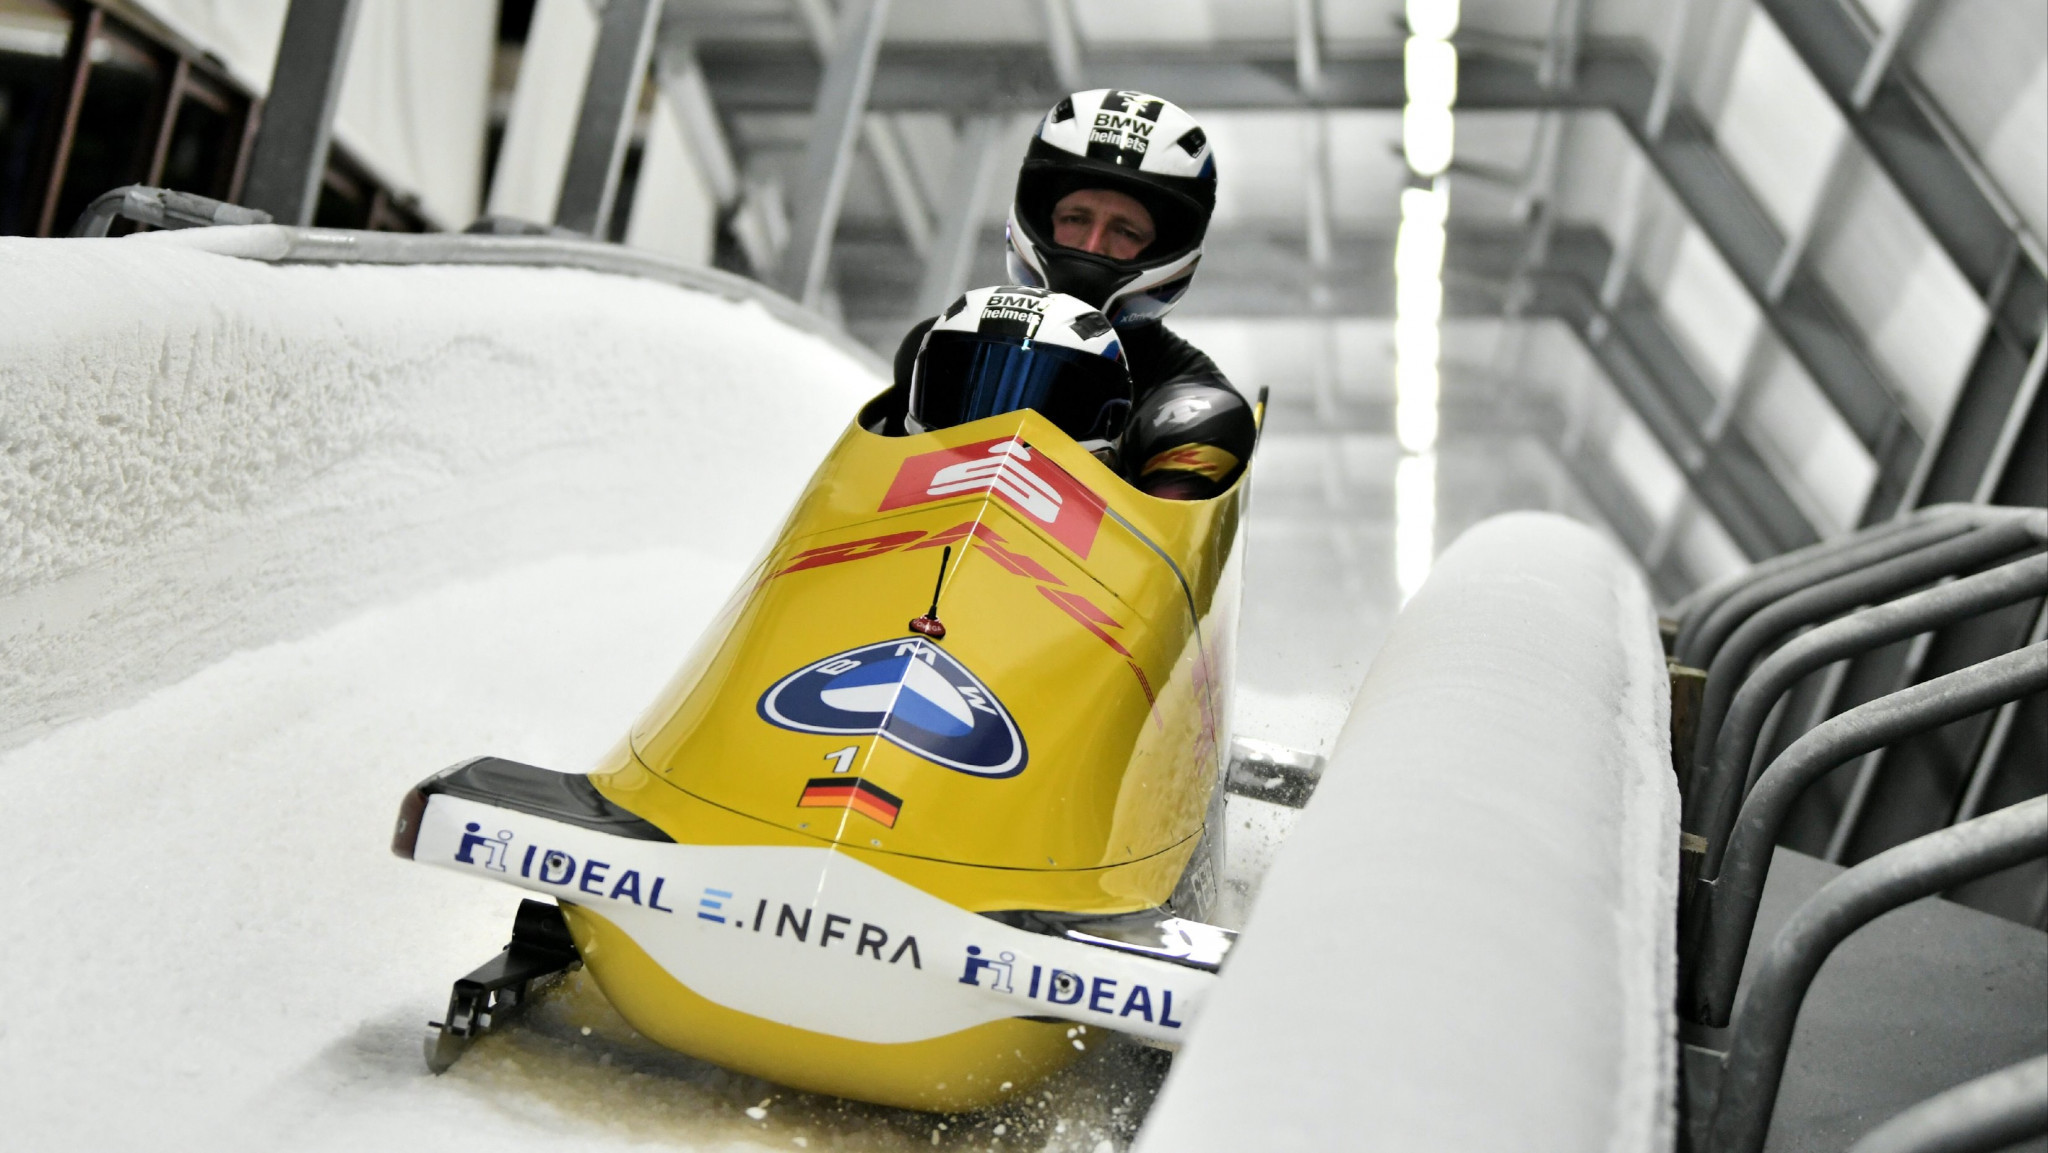 Francesco Friedrich has won every two-man bobsleigh race in this season's IBSF World Cup ©IBSF